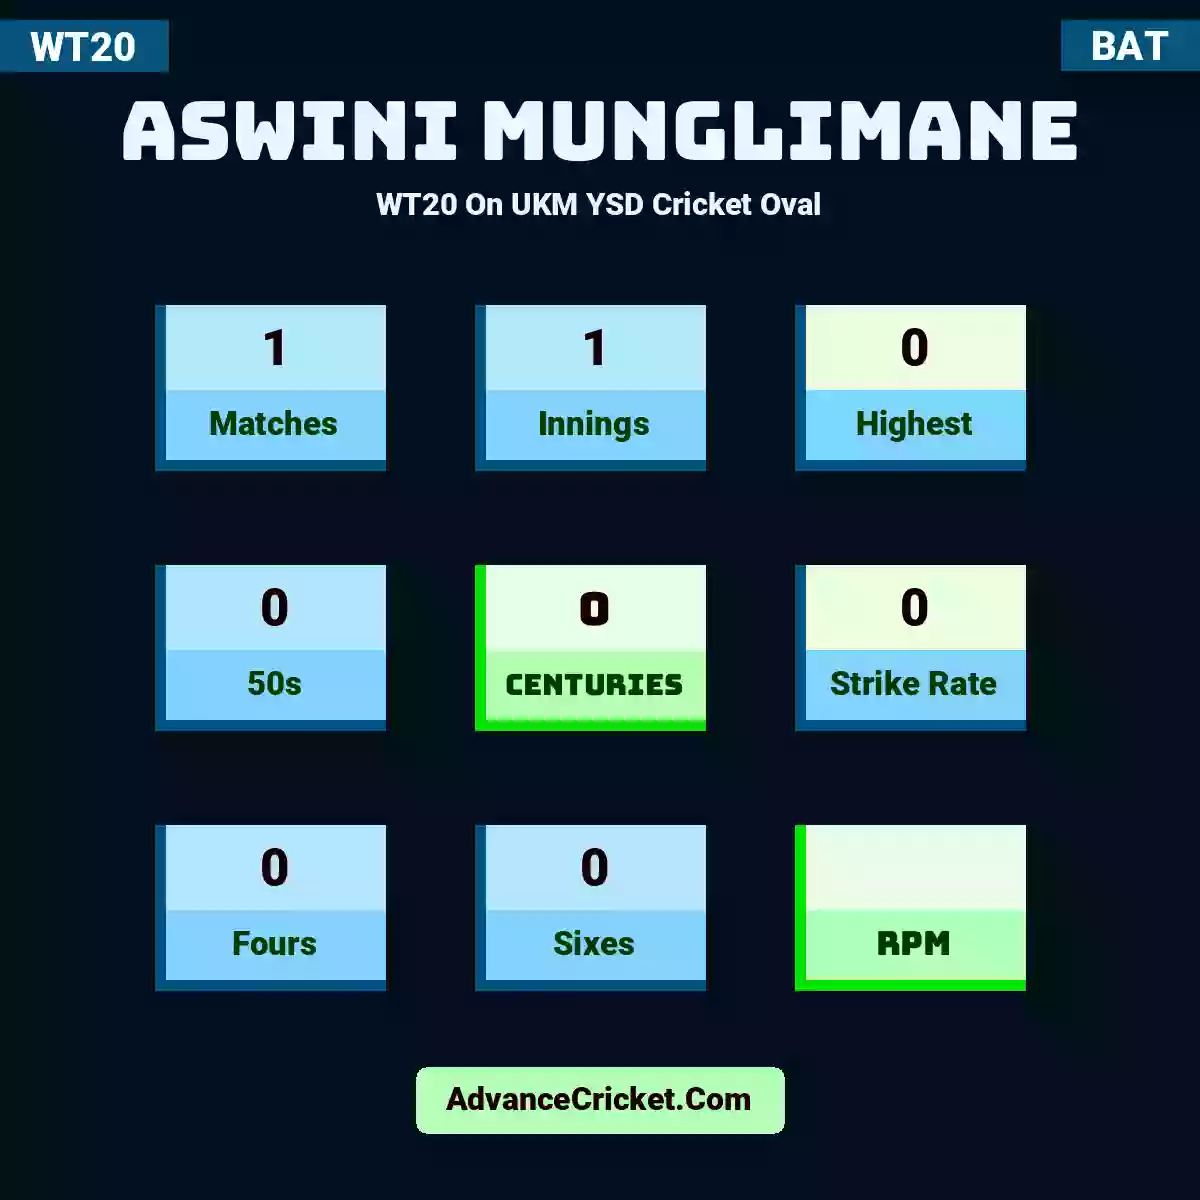 Aswini Munglimane WT20  On UKM YSD Cricket Oval, Aswini Munglimane played 1 matches, scored 0 runs as highest, 0 half-centuries, and 0 centuries, with a strike rate of 0. A.Munglimane hit 0 fours and 0 sixes.